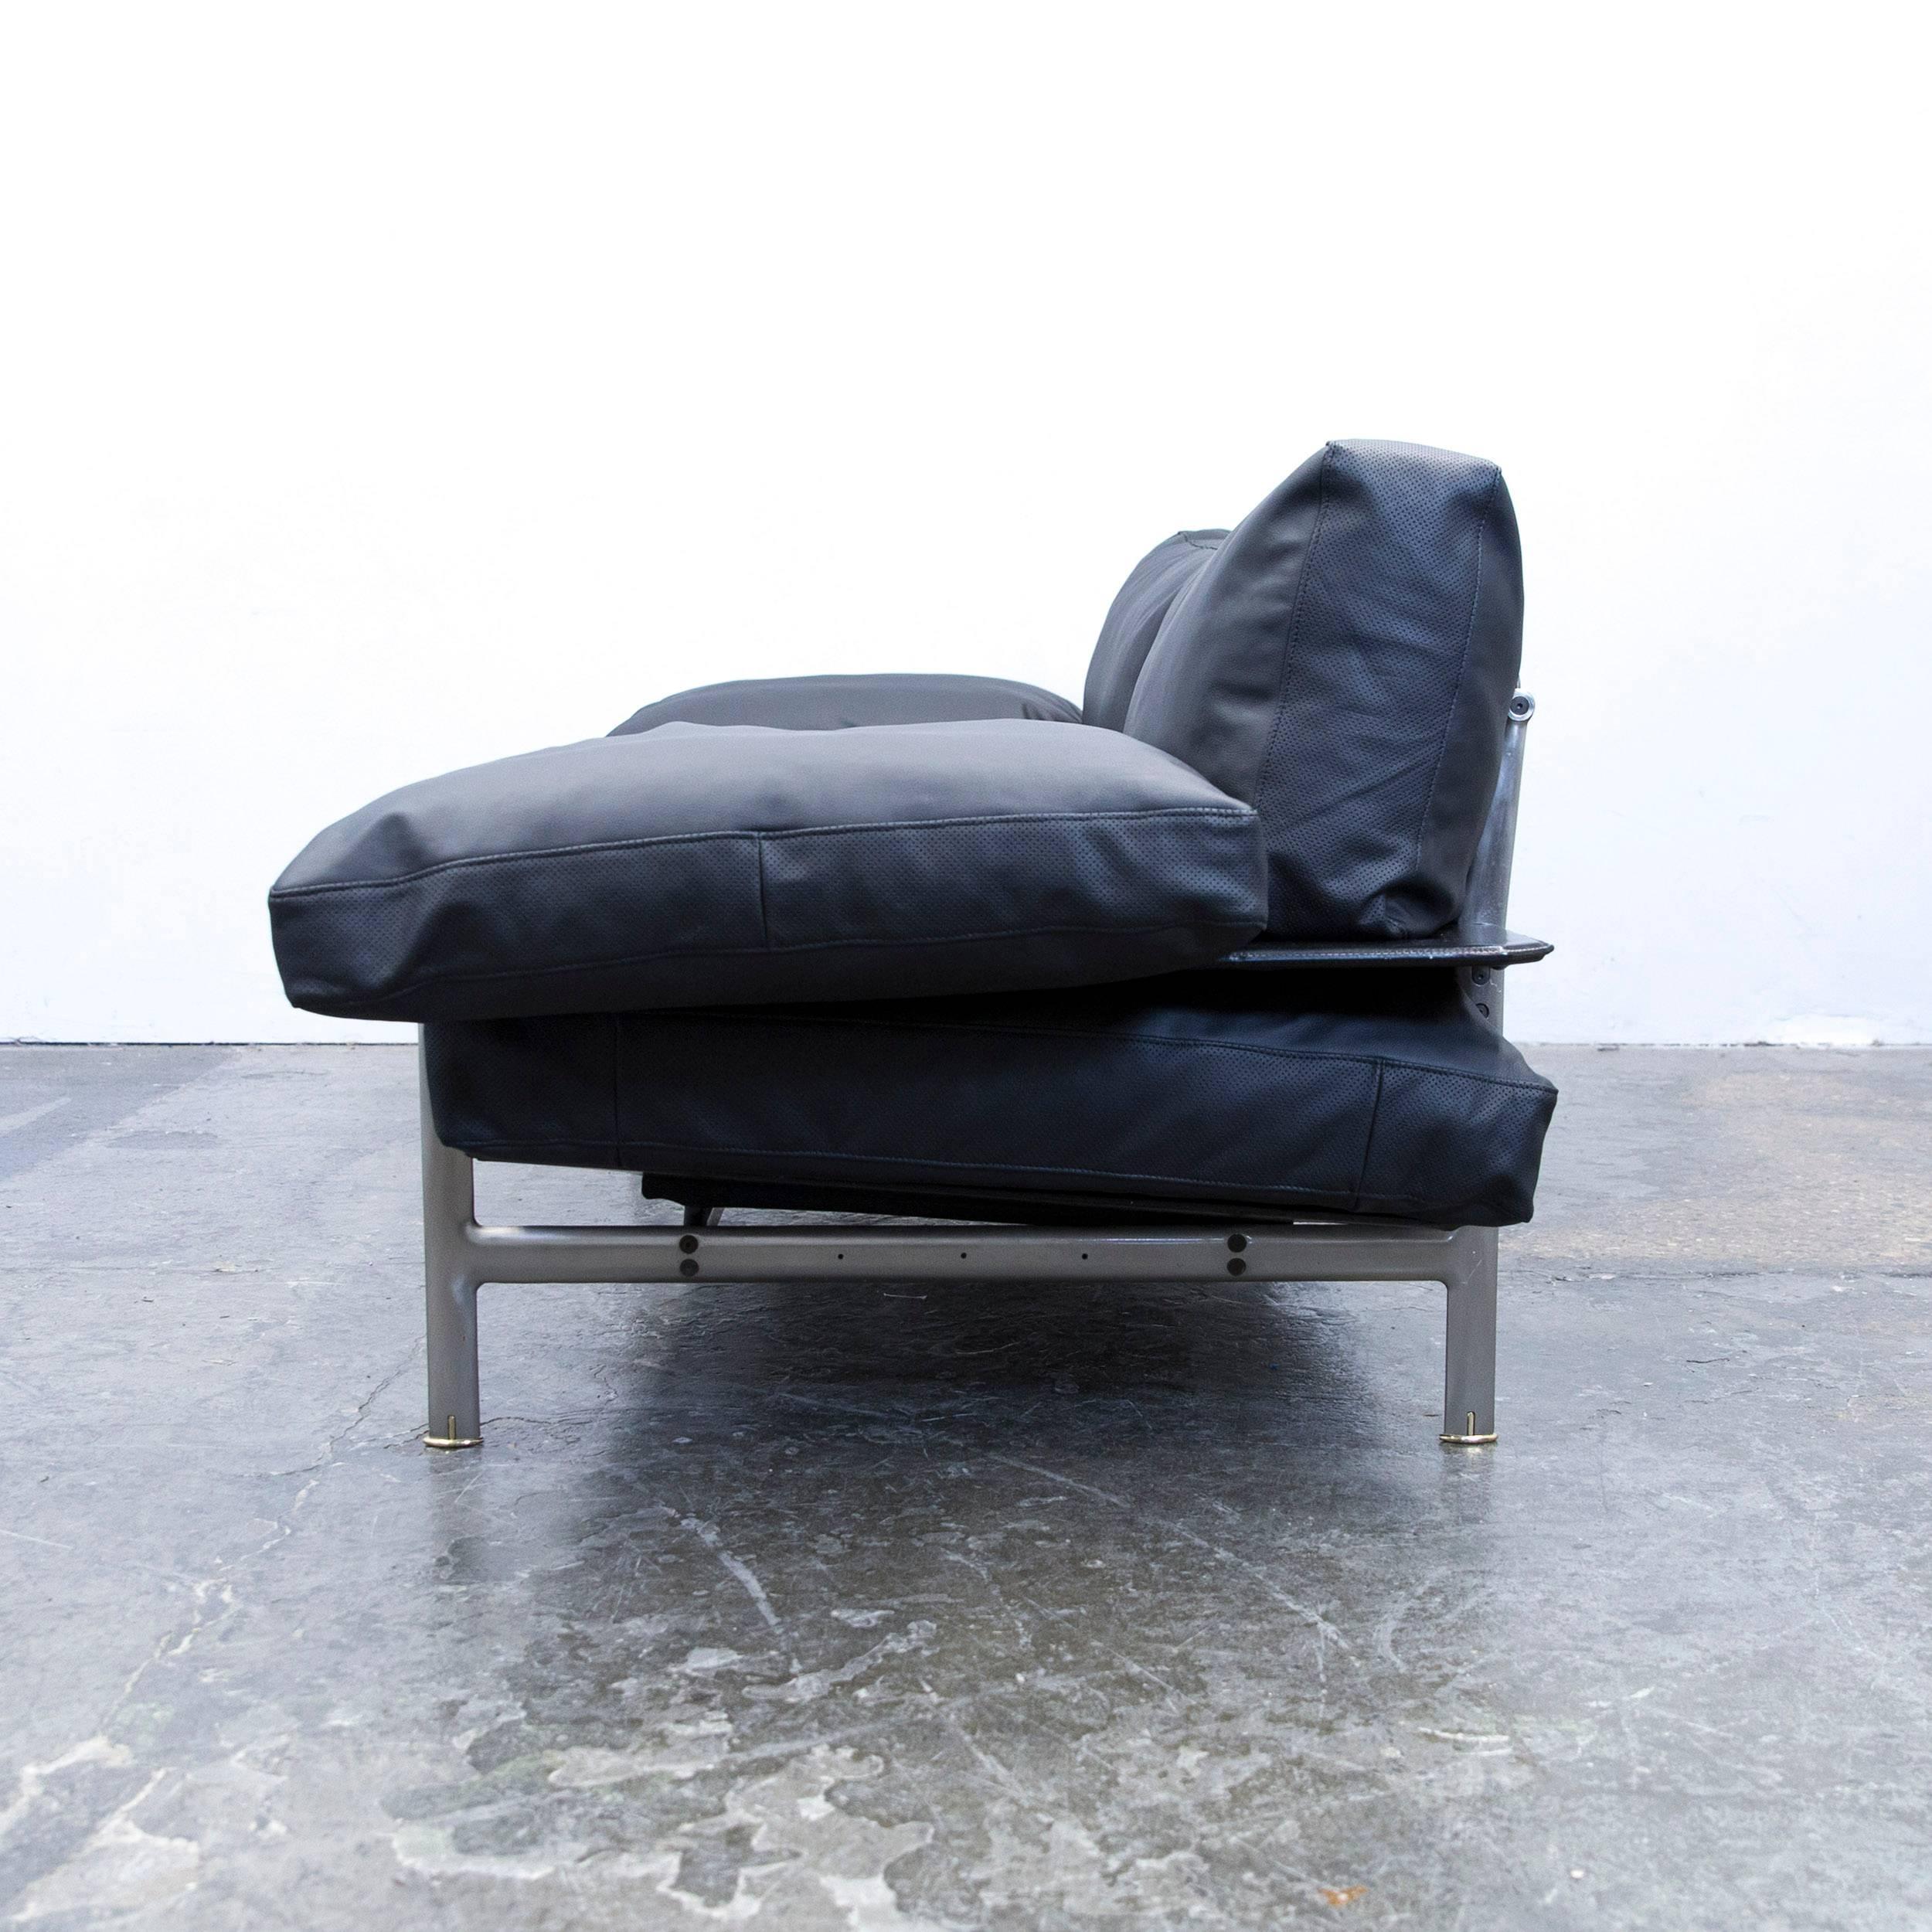 B&B Italia Diesis Designer Sofa Leather Black Two-Seat Couch Modern 1